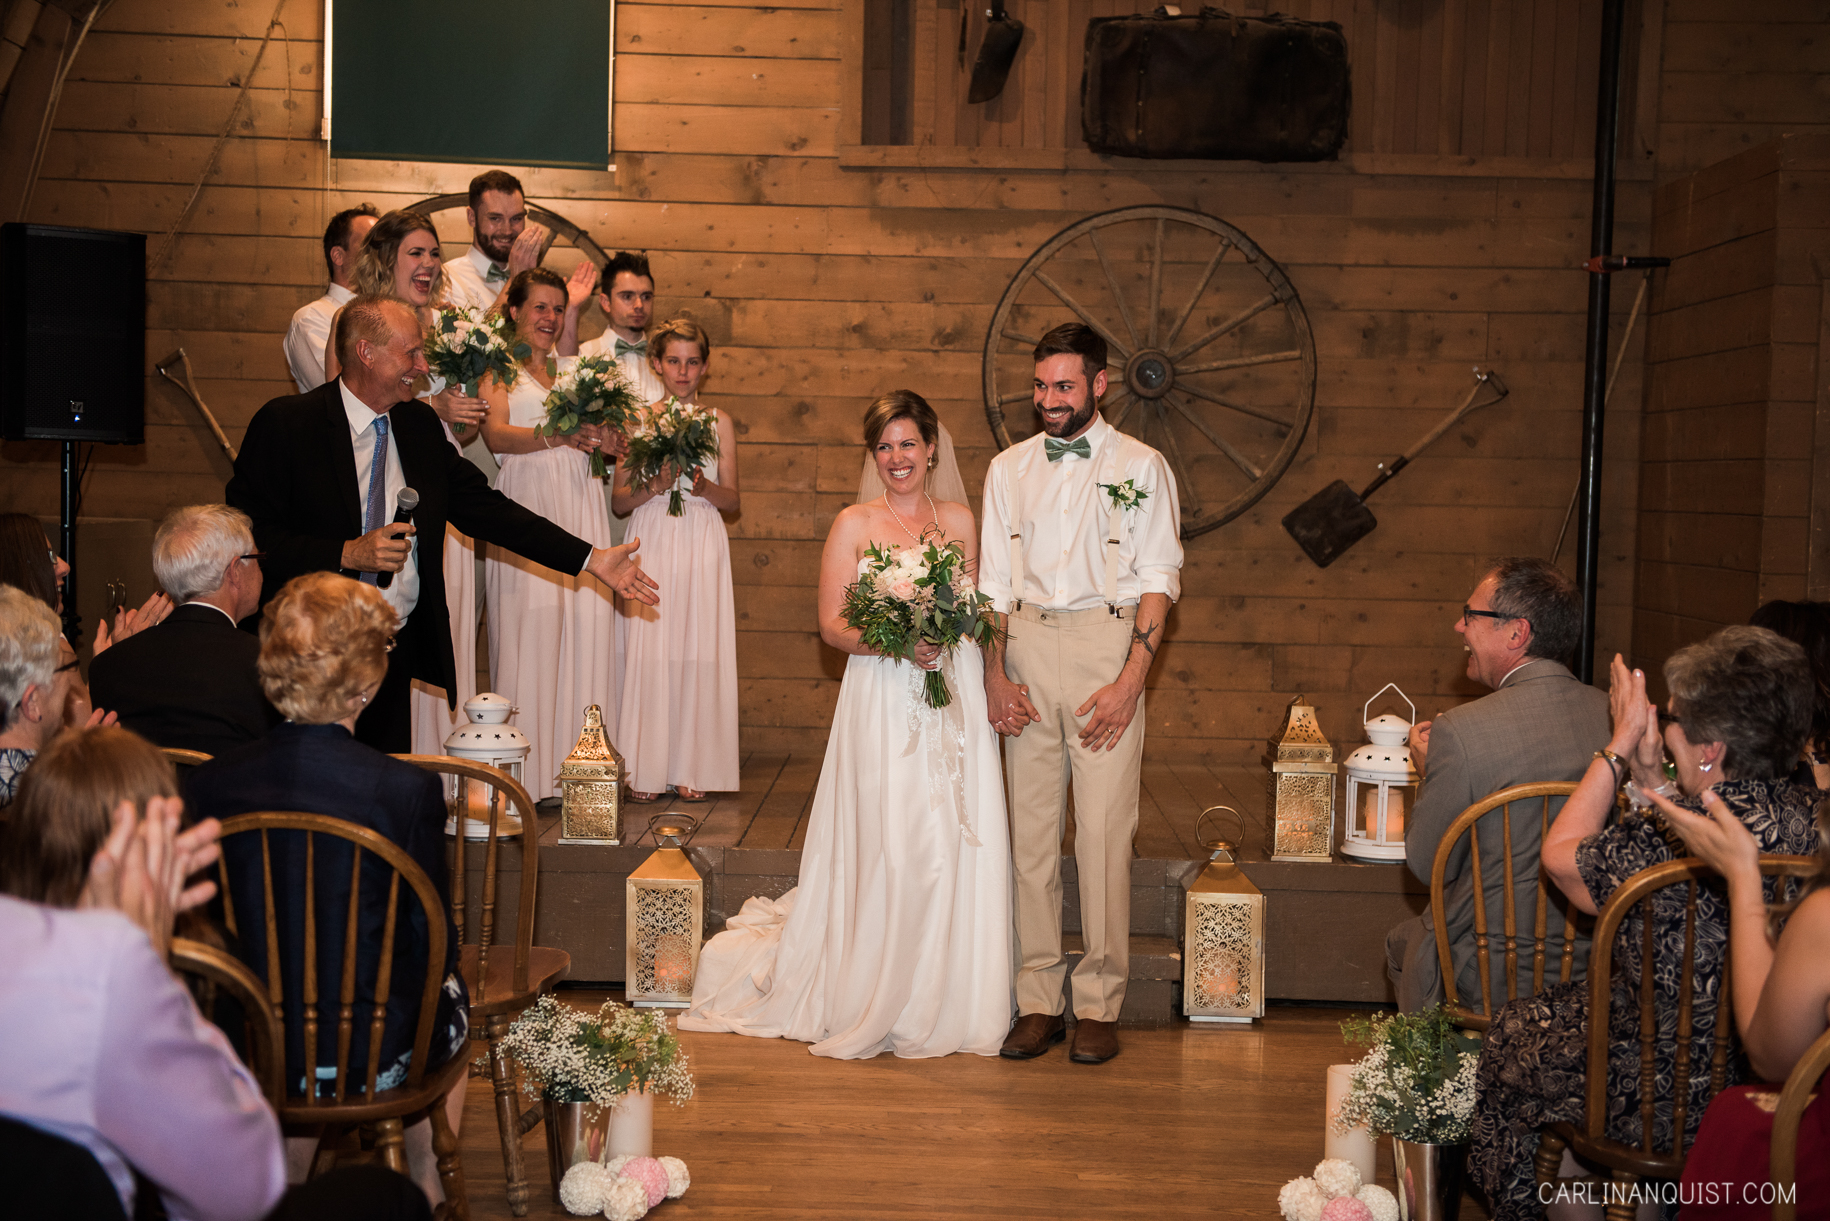 Gunn's Dairy Barn Ceremony | Heritage Park Wedding Photographer